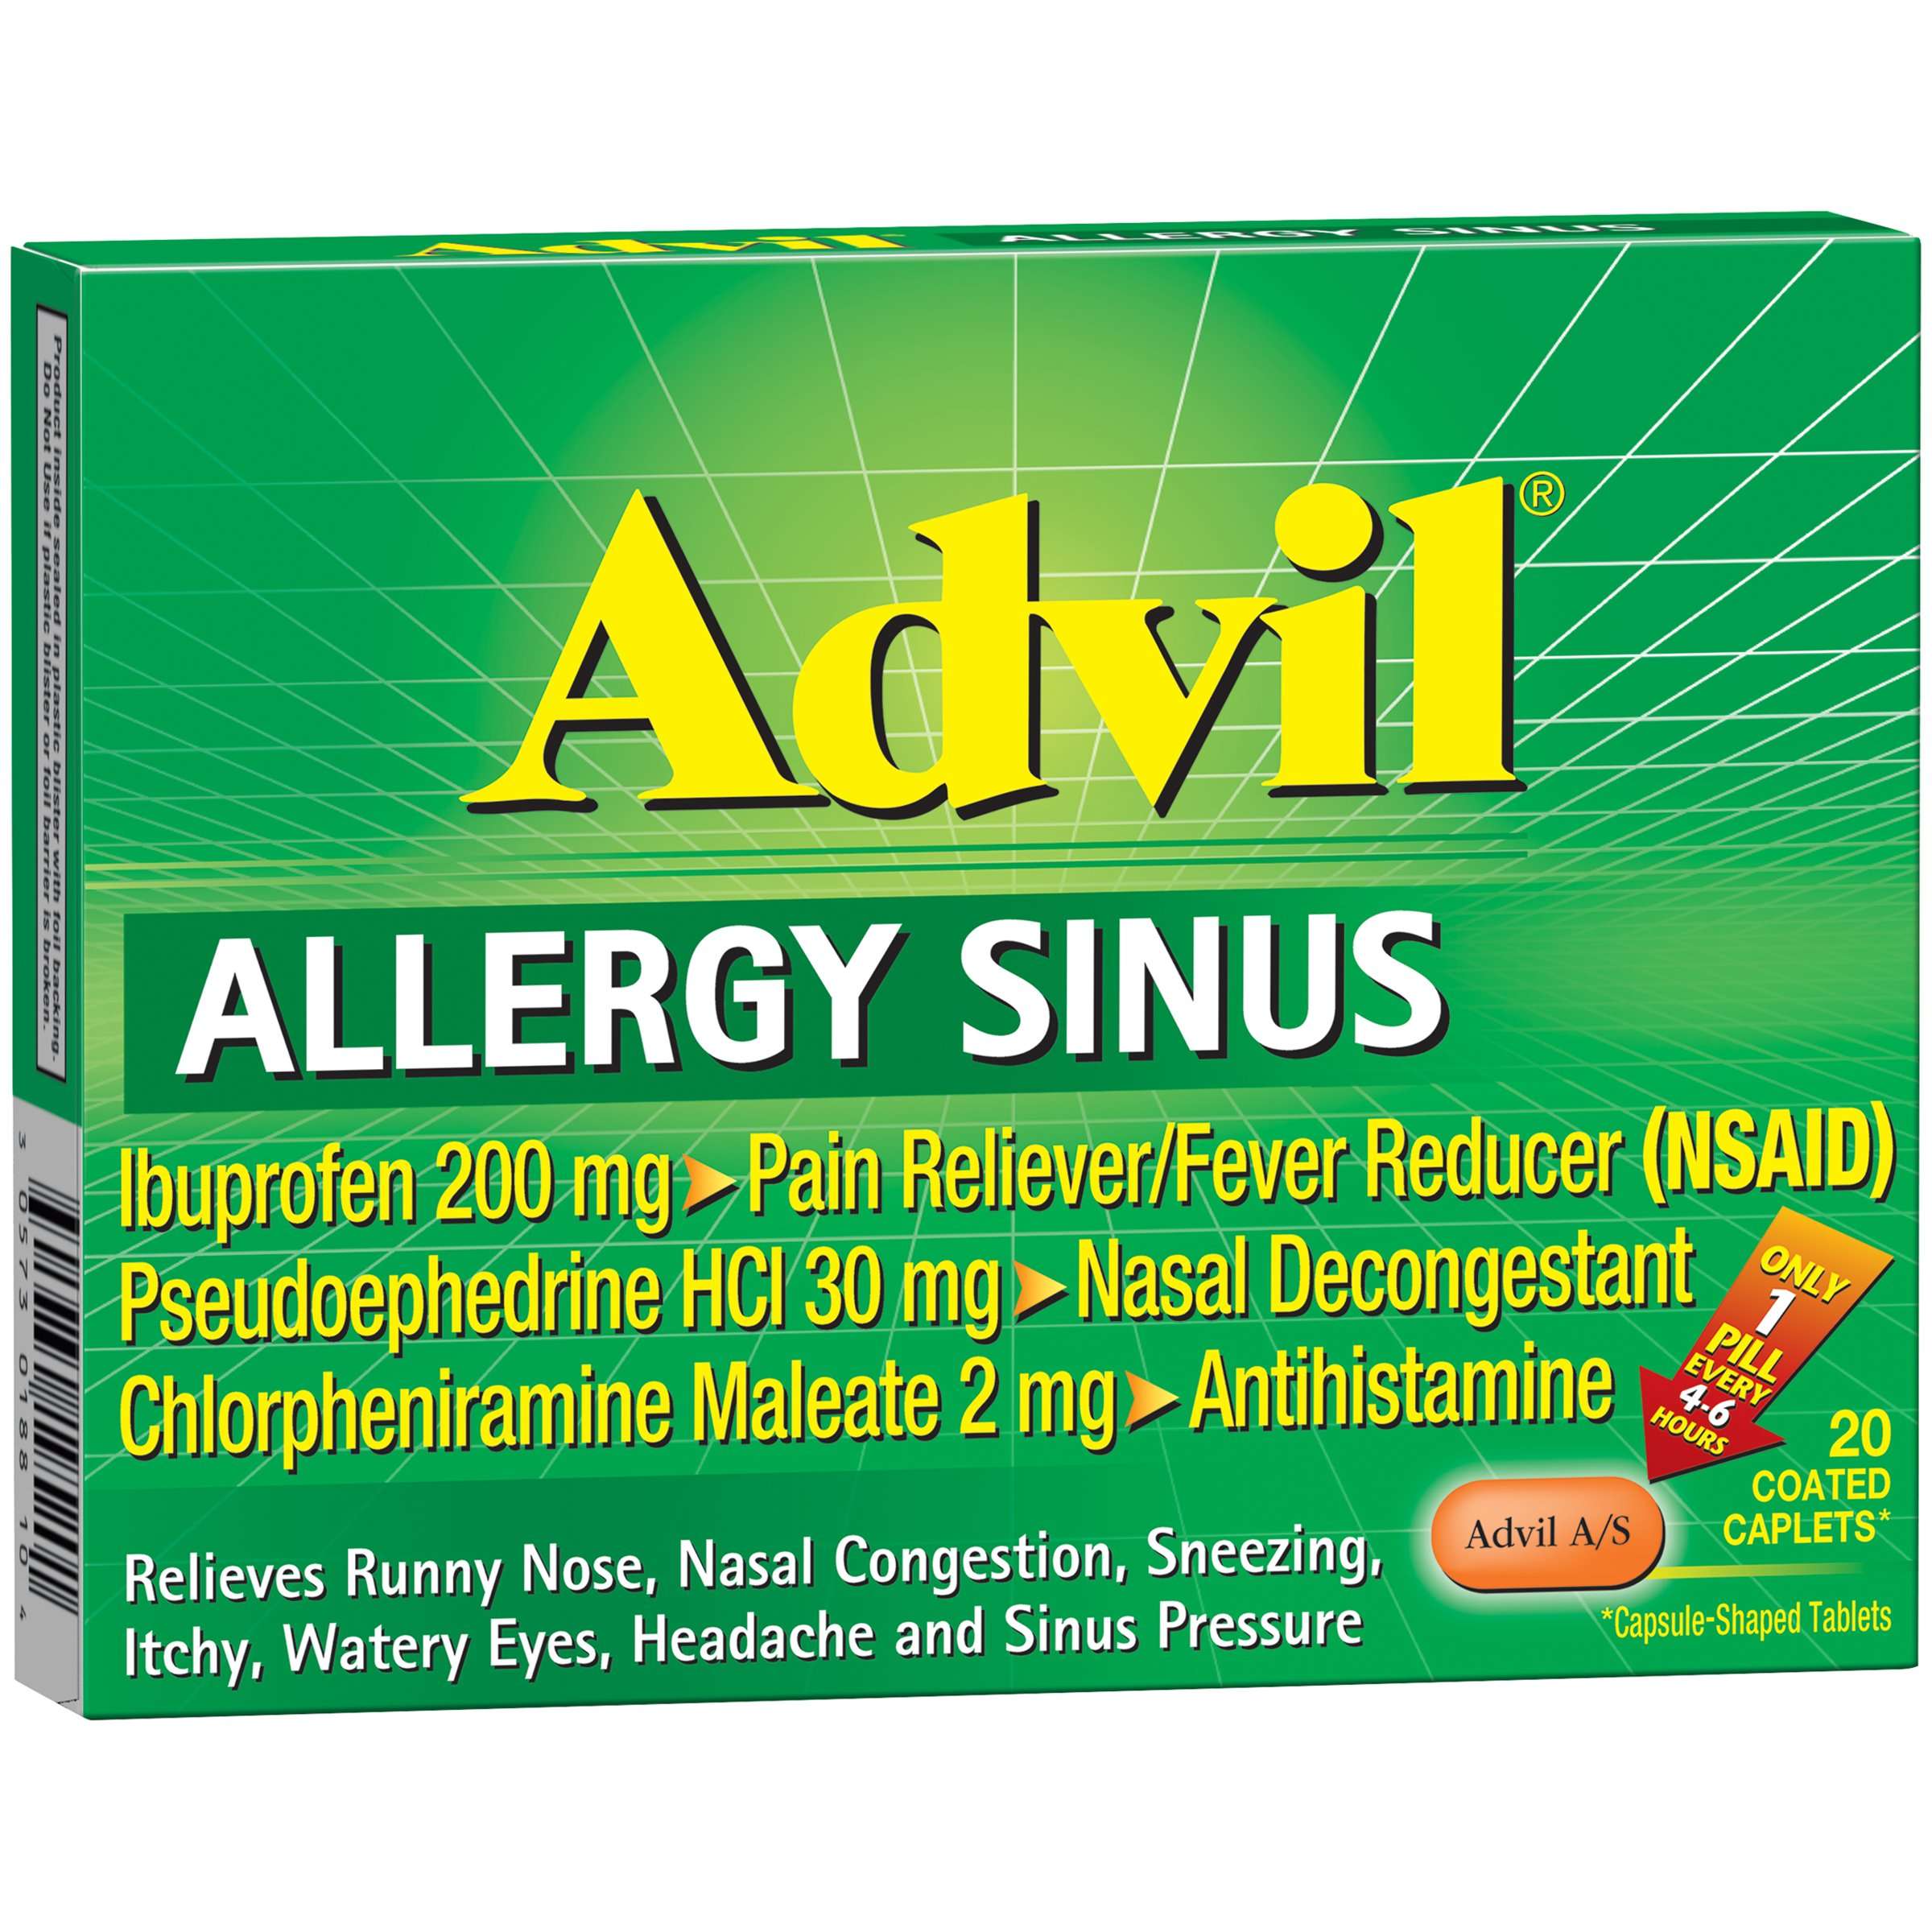 Advil Allergy Sinus Ibuprofen Nasal Decongestant Coated Caplets